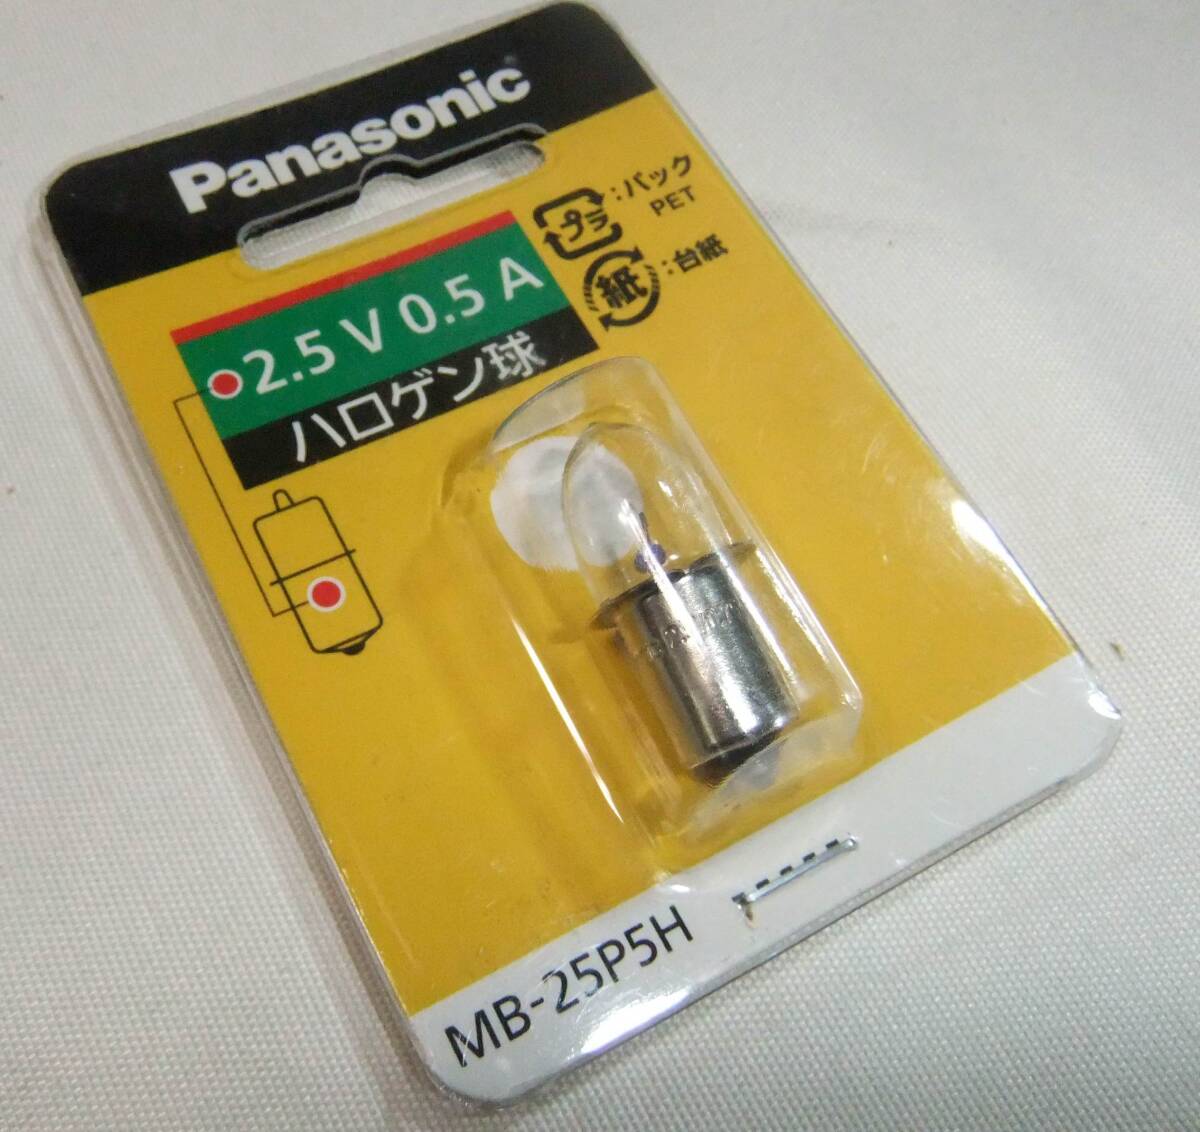 Panasonic / パナソニック / ハロゲン球 / 2.5V 0.5A / サイクルライト交換電球 / 未使用の画像1